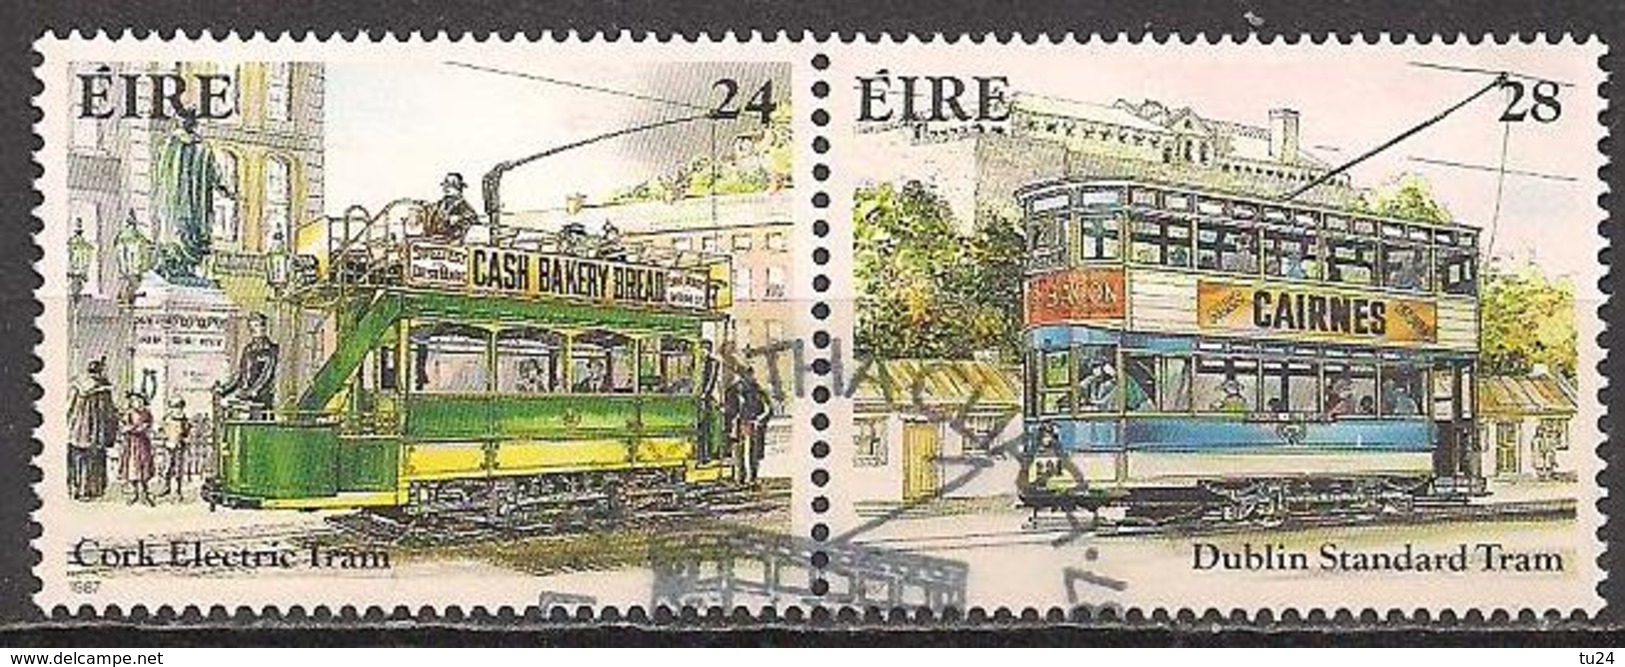 Irland  (1987)  Mi.Nr.  615 + 616  Gest. / Used  (2ae11) - Oblitérés